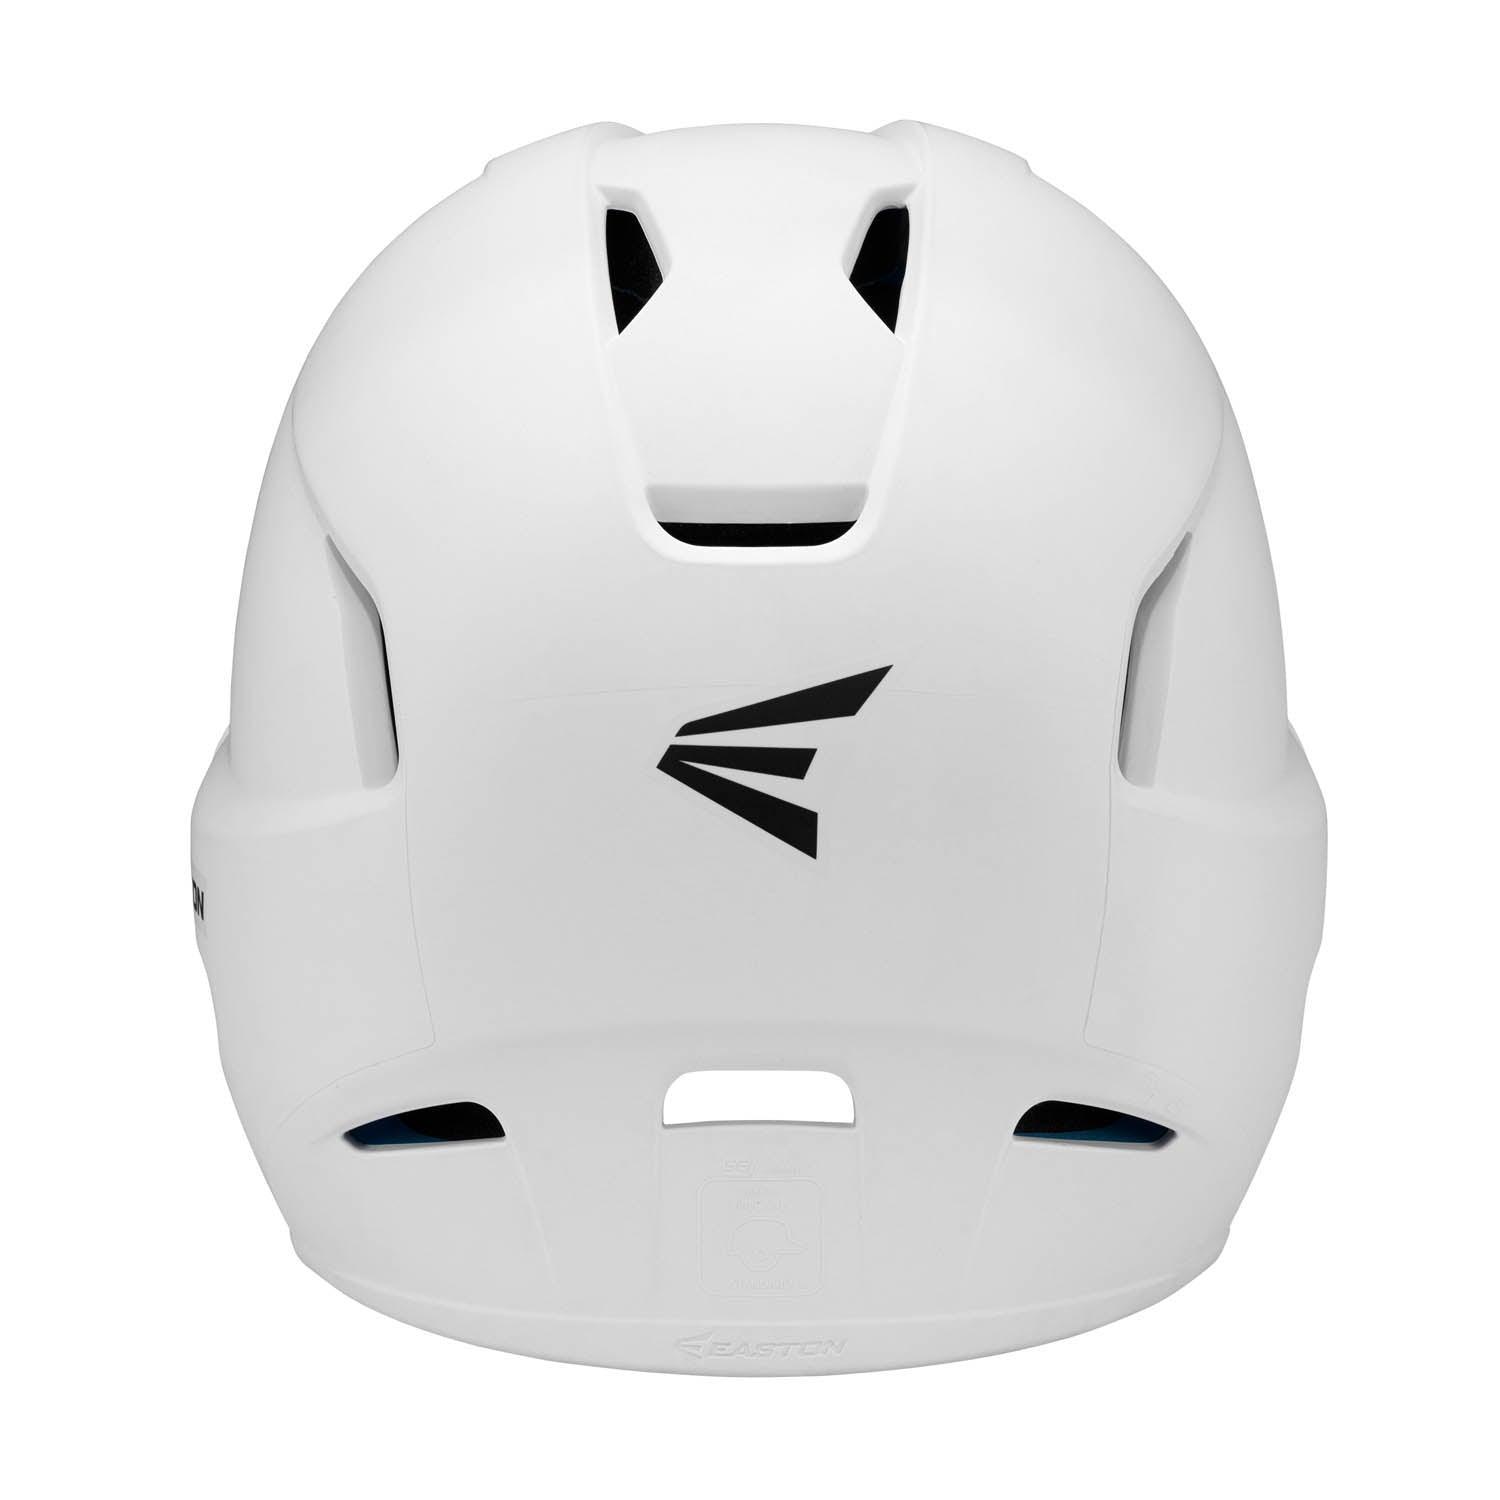 Z5 2.0 Matte Batting Helmet - Senior - Sports Excellence